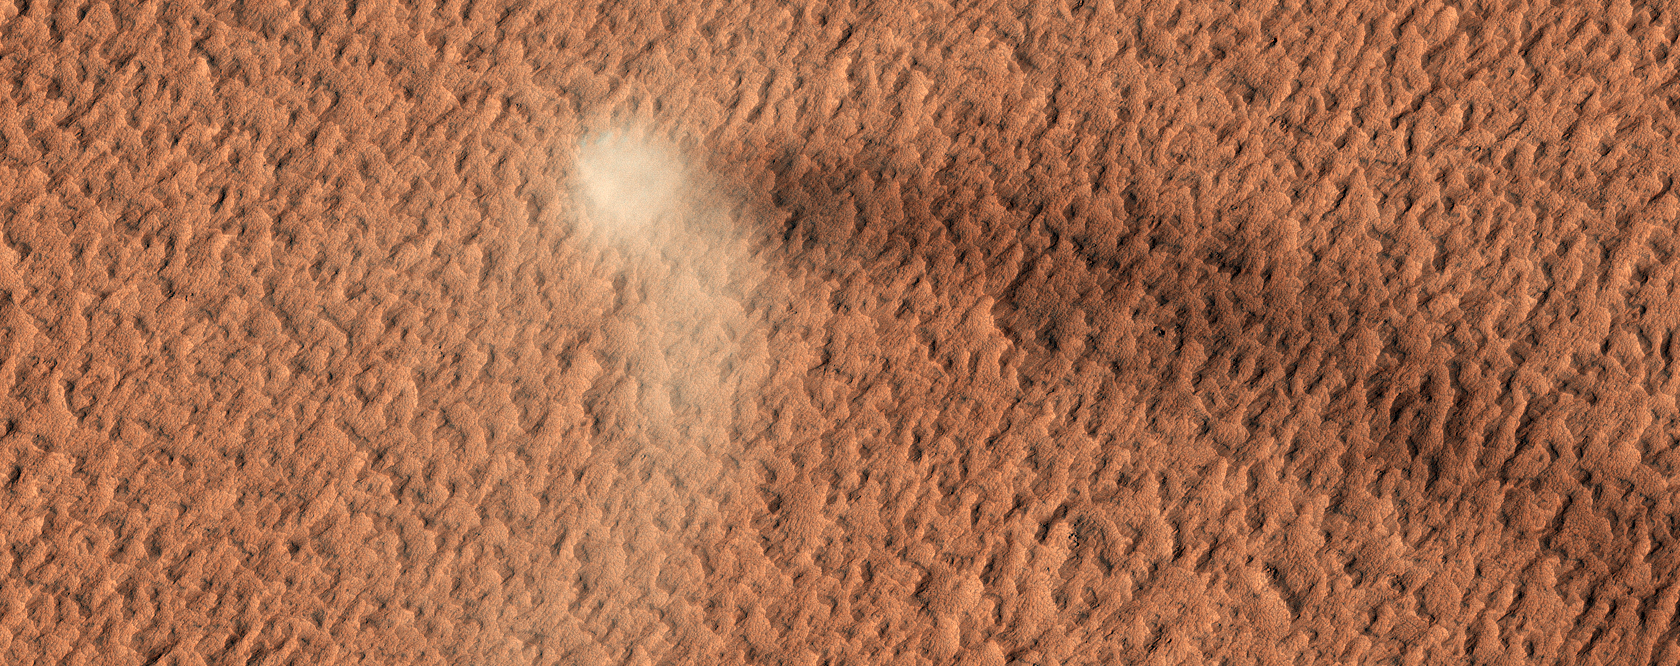 Tempesta di sabbia del pianeta Marte